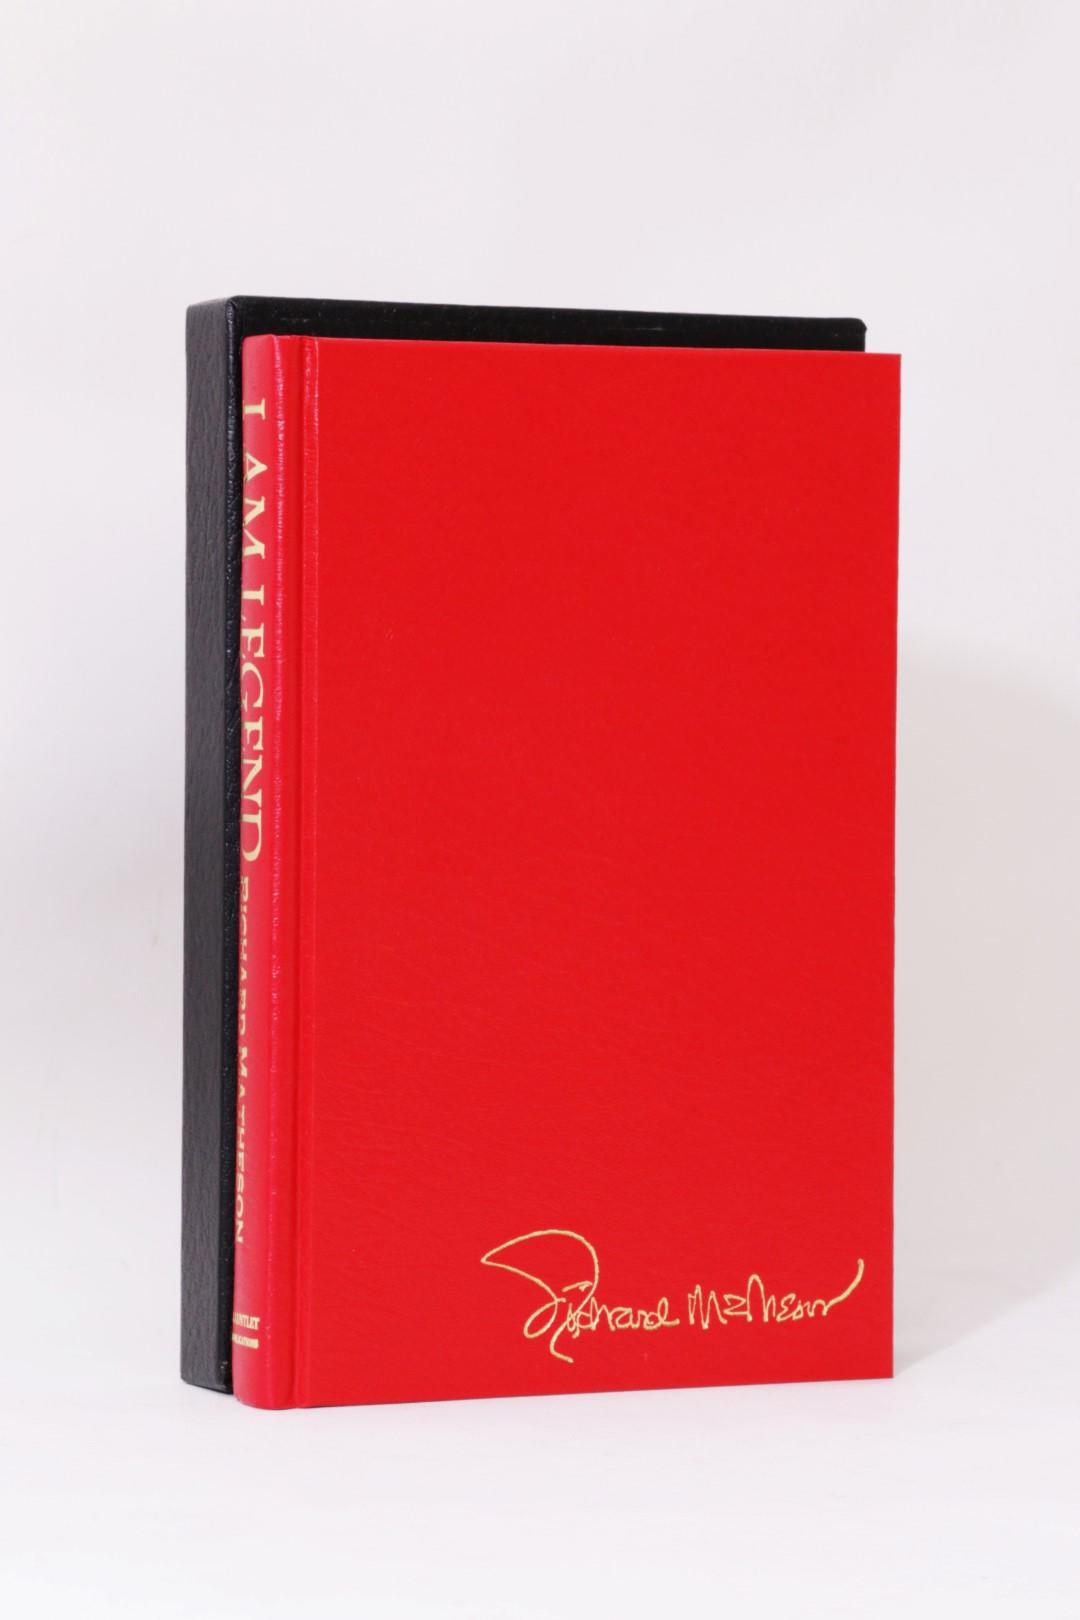 Richard Matheson - I am Legend - Gauntlet Press, 1995, Signed Limited Edition.